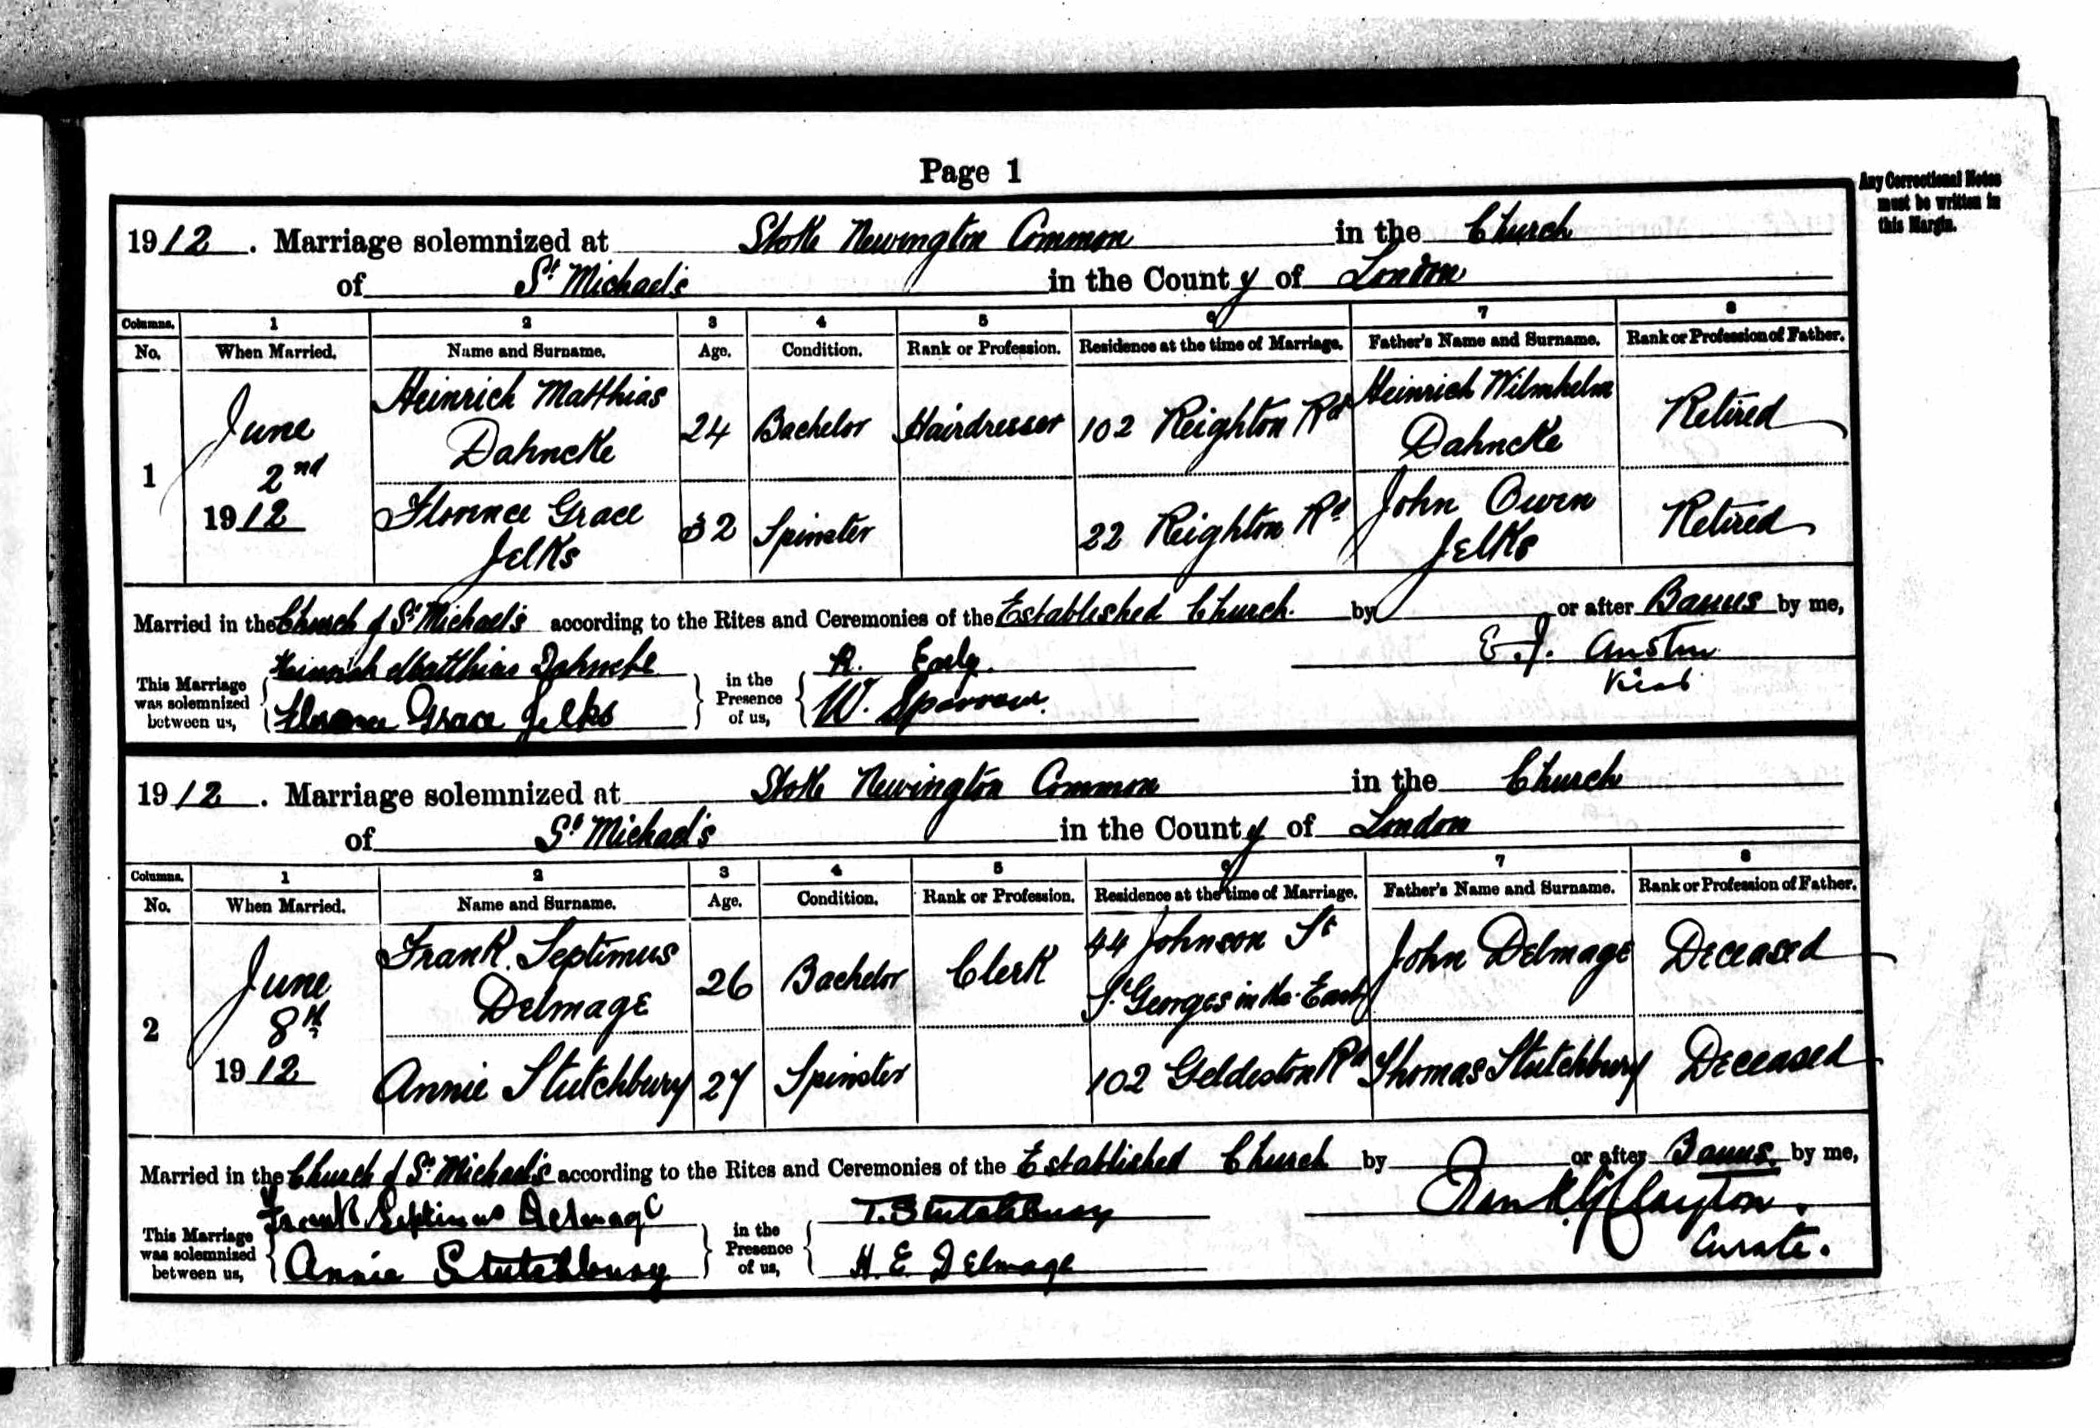 1912 marriage of Annie Stutchbury to Frank Septimus Delmage